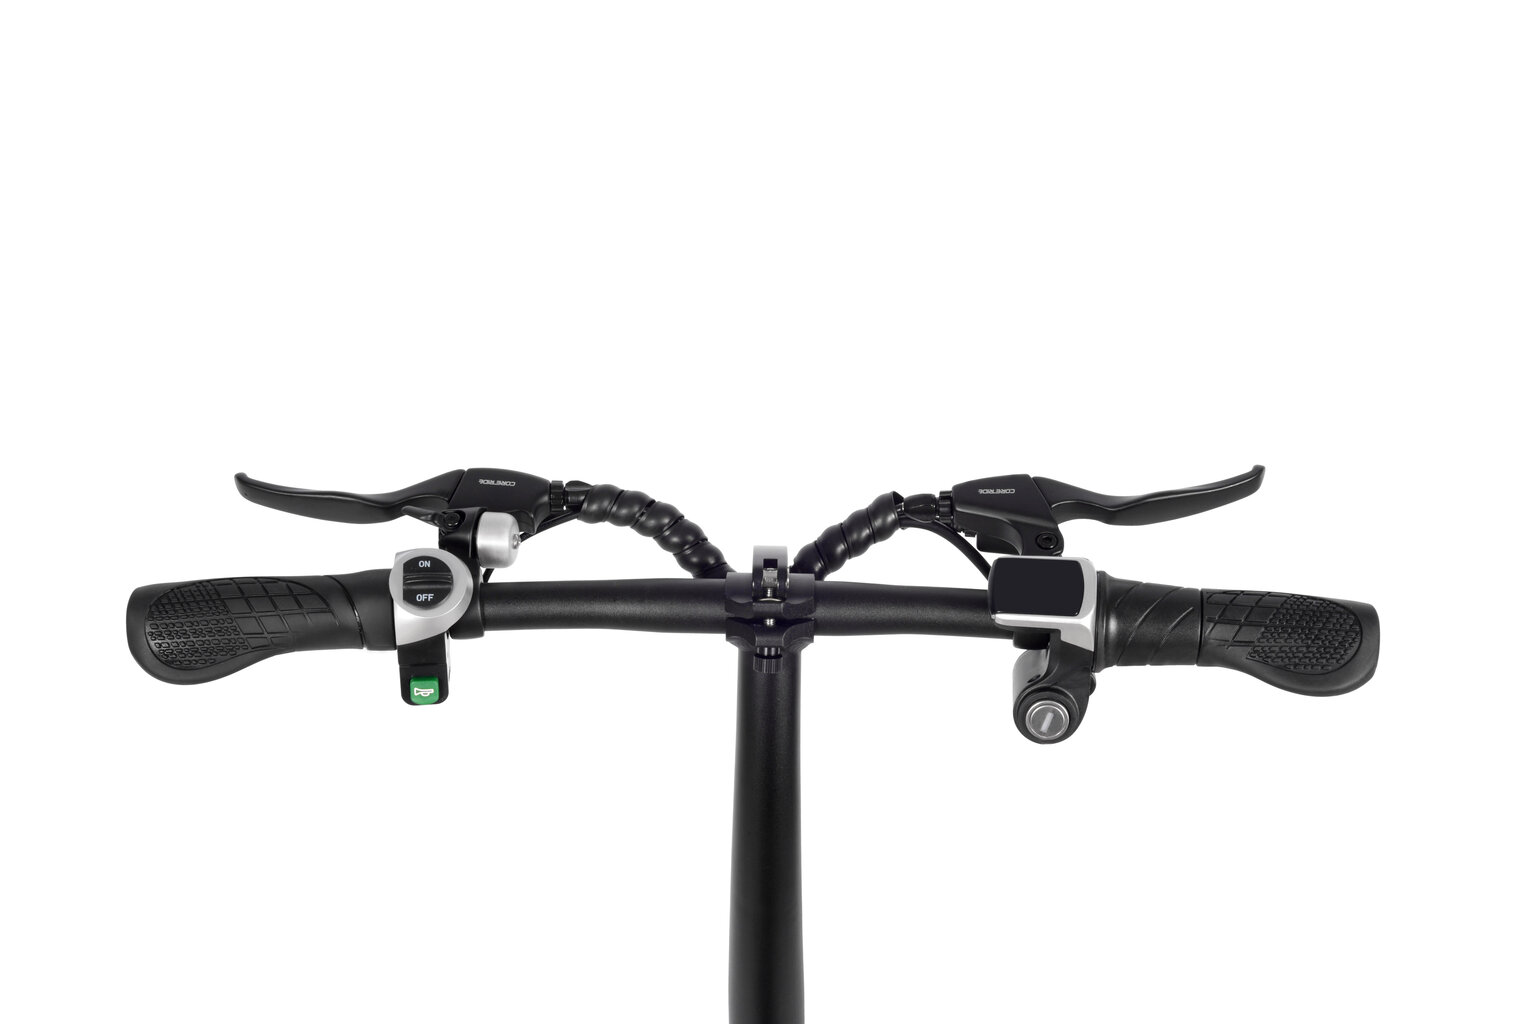 Elektrinis dviratis Sponge Bike 12'', juodas цена и информация | Elektriniai dviračiai | pigu.lt